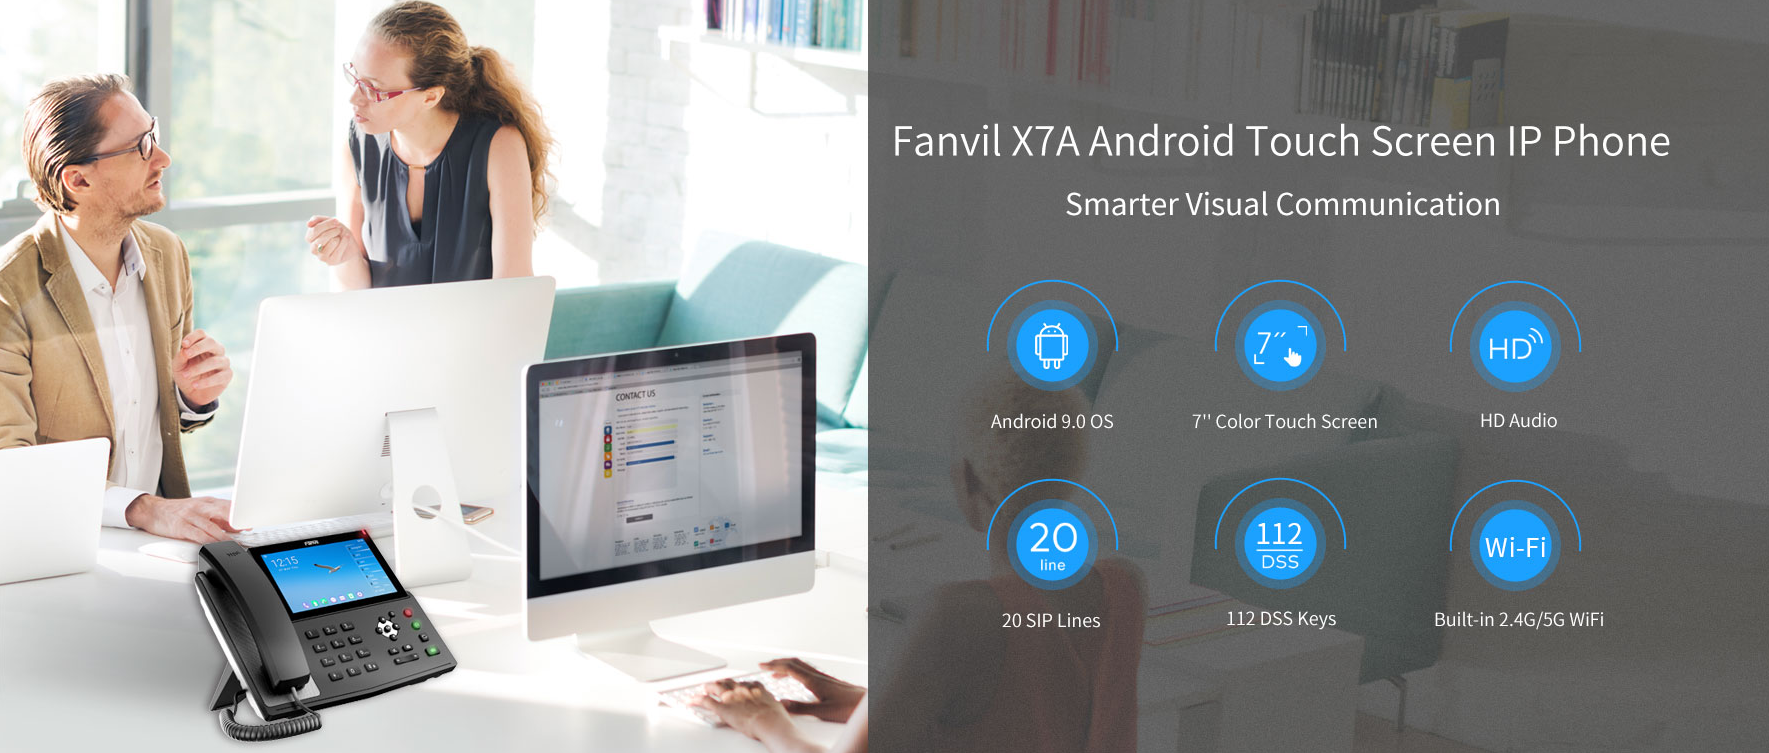 Fanvil X7A Android Touch Screen IP Phone - Hong Kong Supplier - Sipmax Technology Group - Fanvil Hong Kong - 香港代理